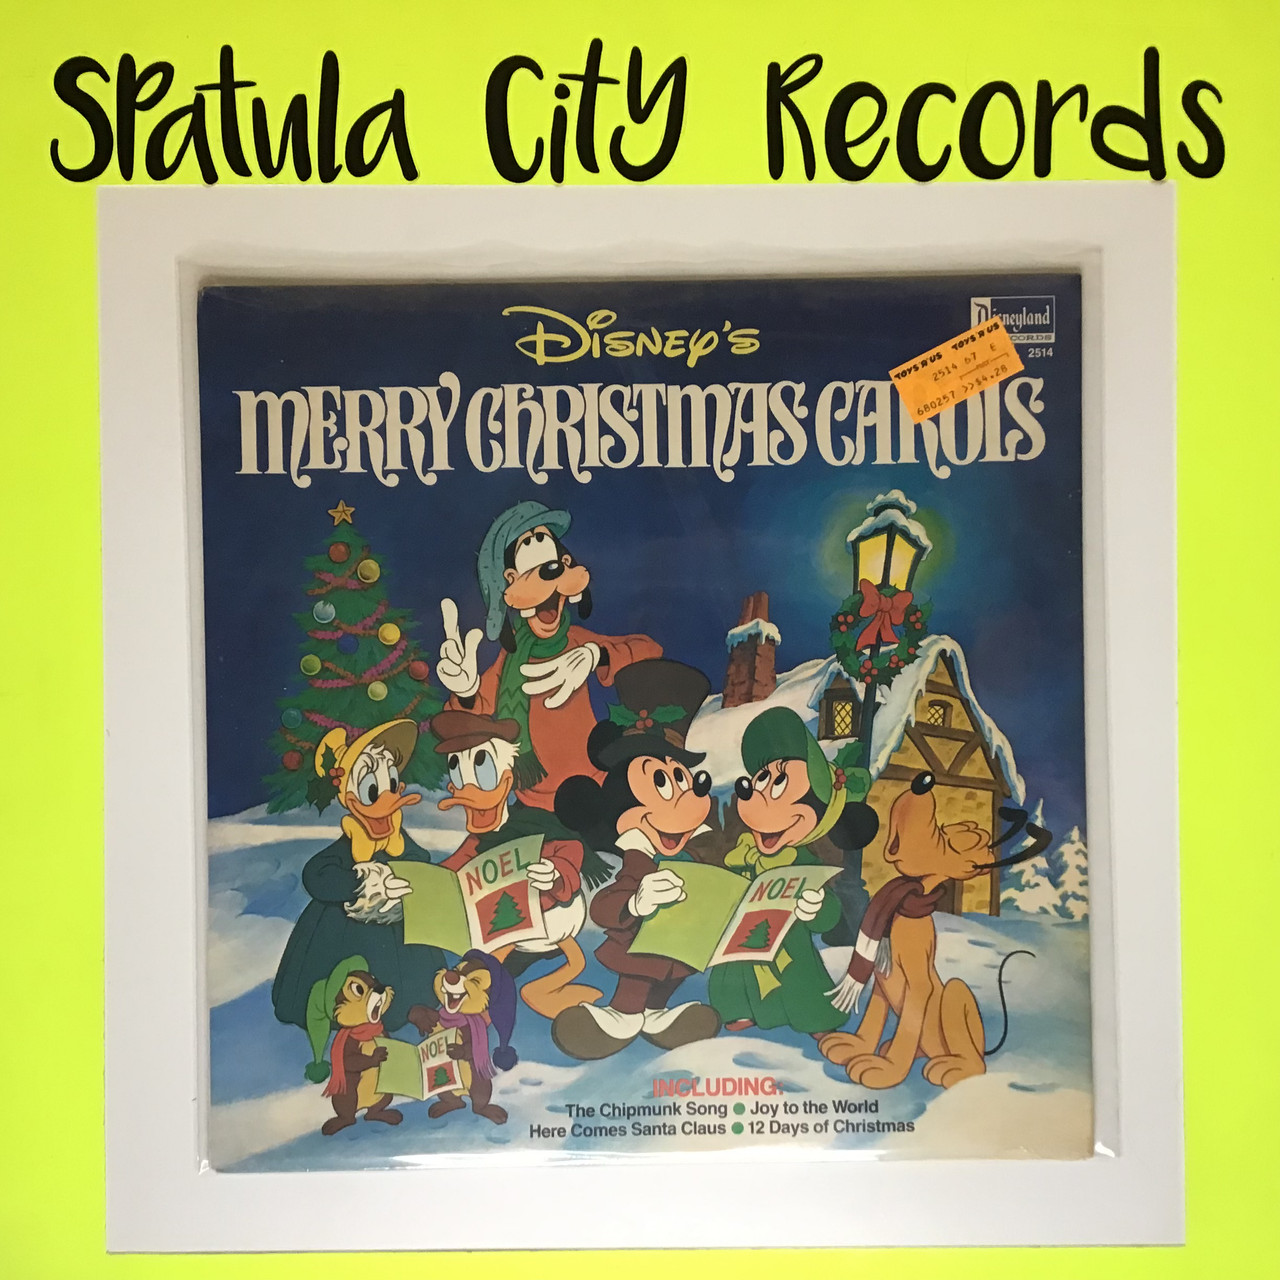 Disney's Merry Christmas Carols - SEALED - vinyl record album LP